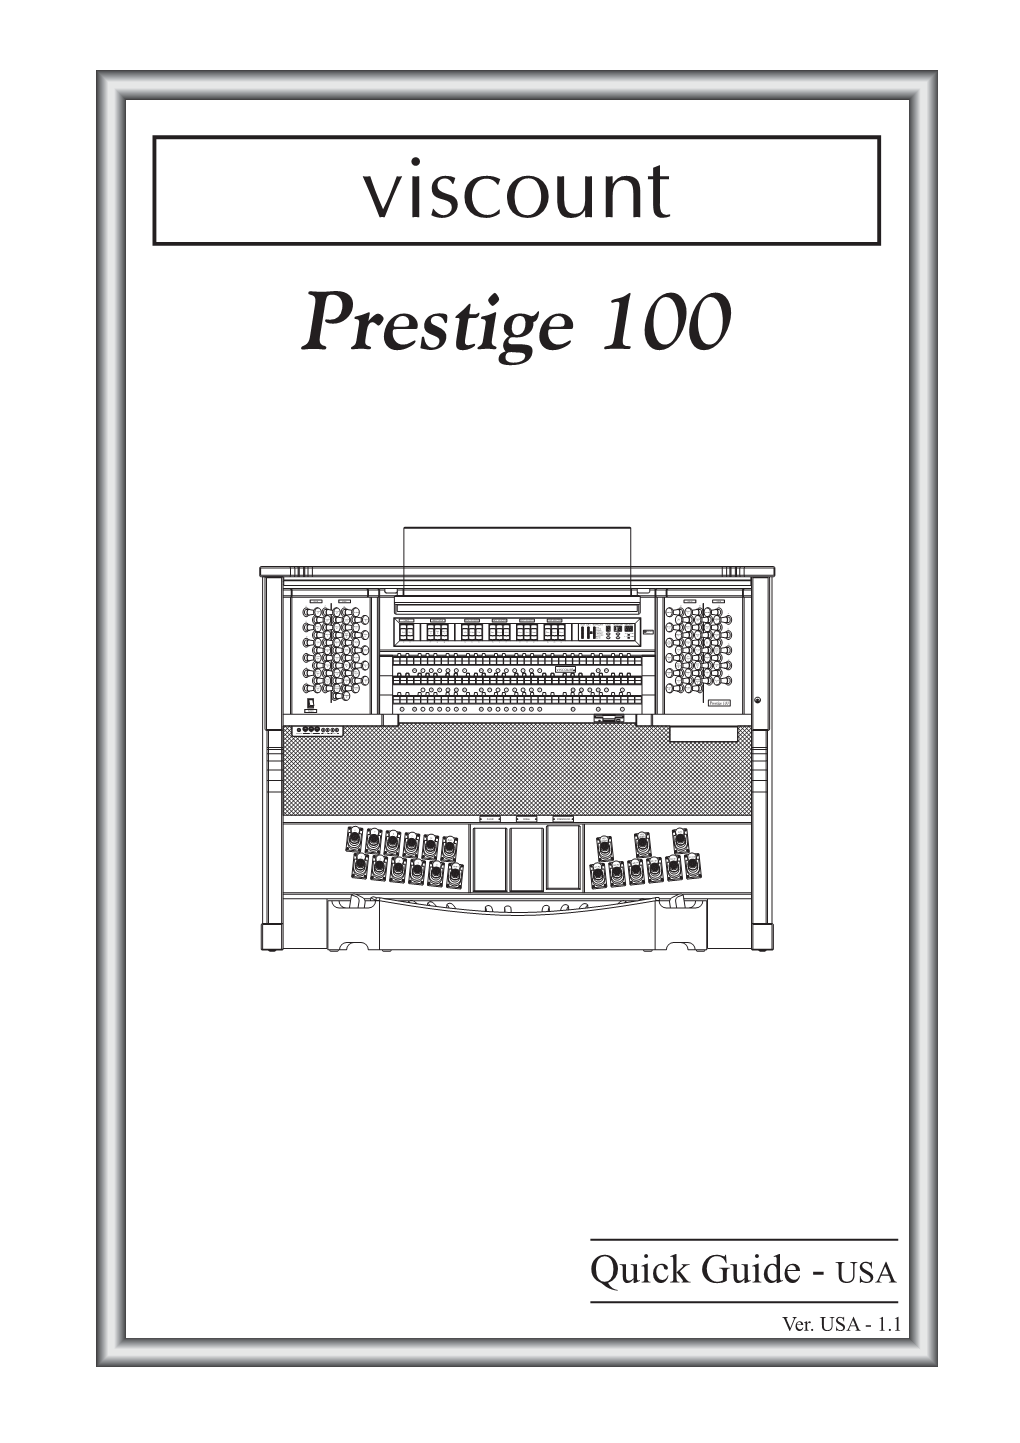 Viscount Prestige 100